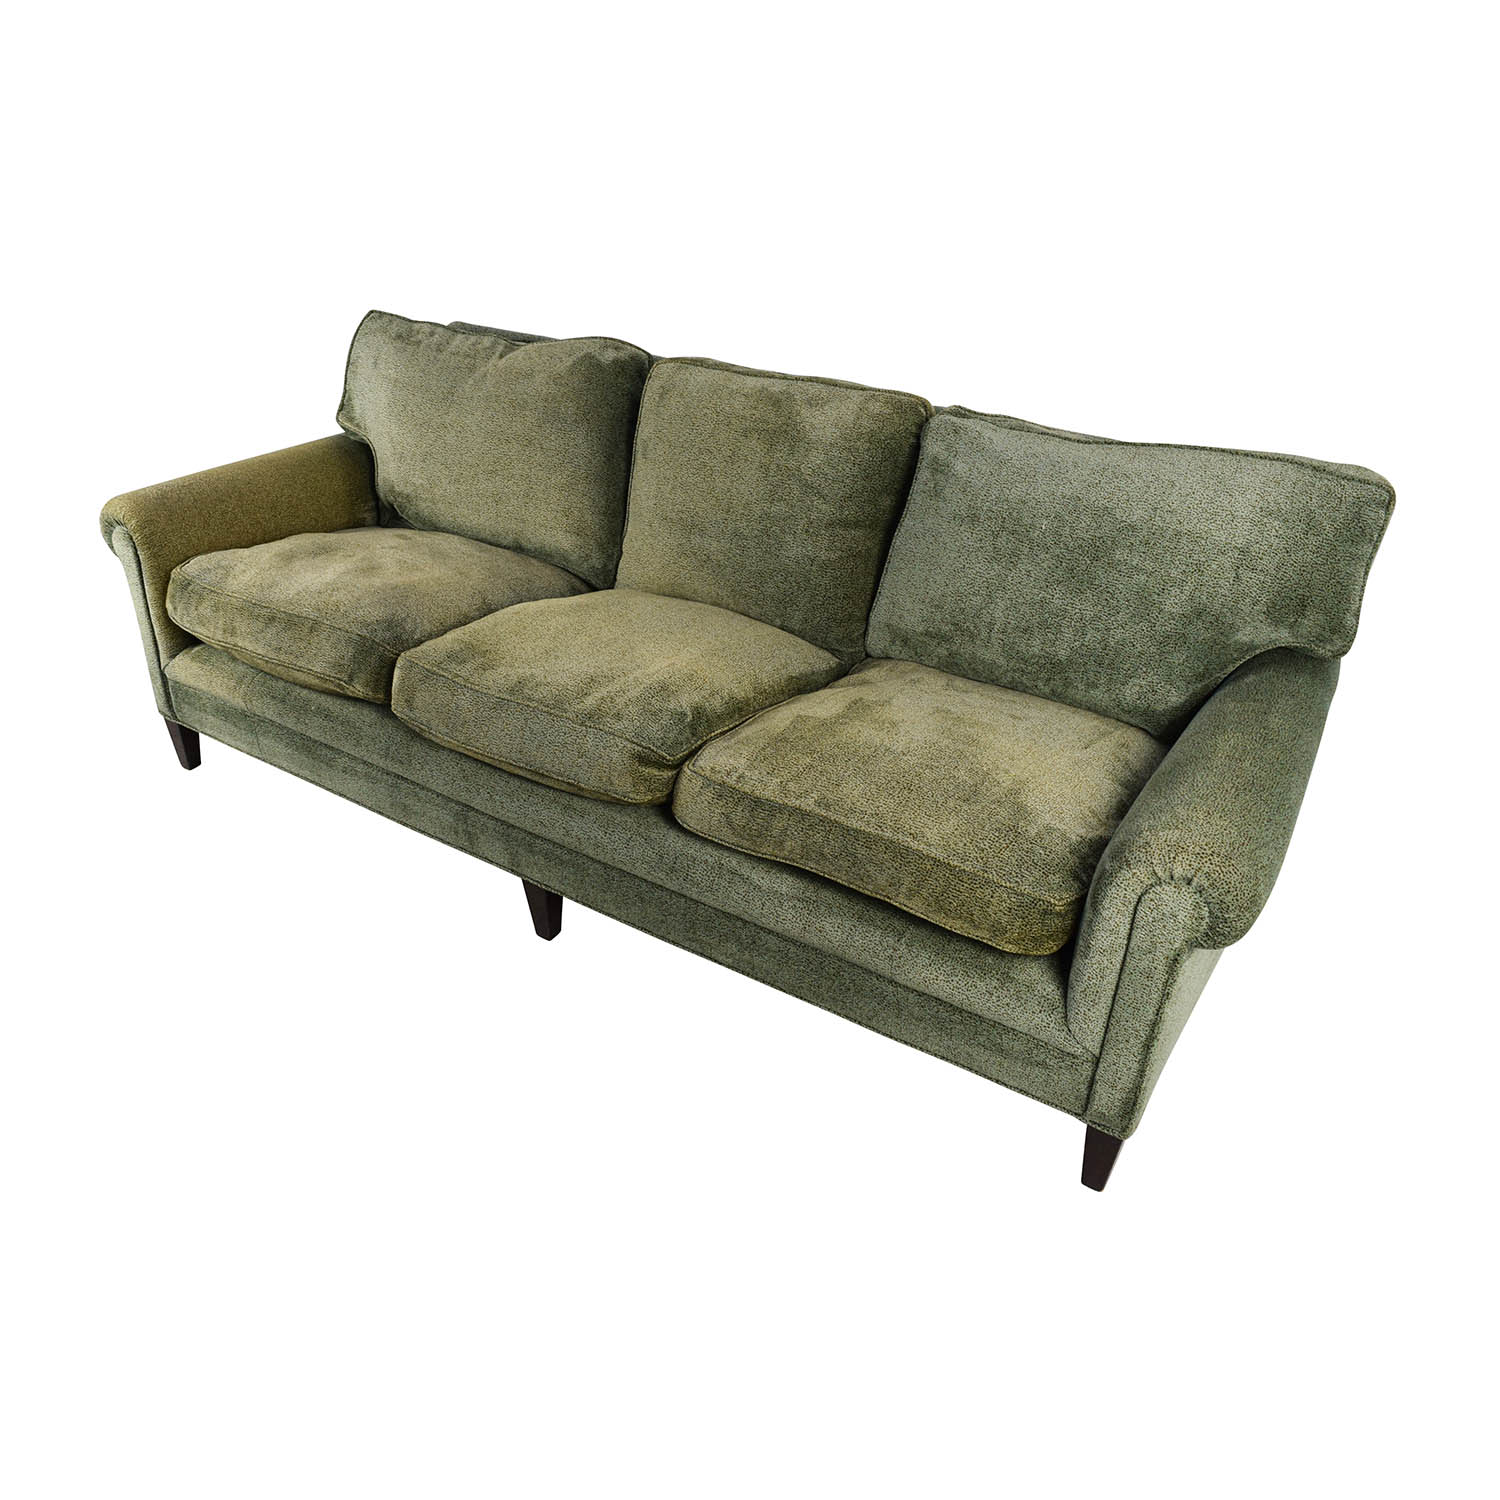 Georgian Sofa with seat cushions - George Smith (US)